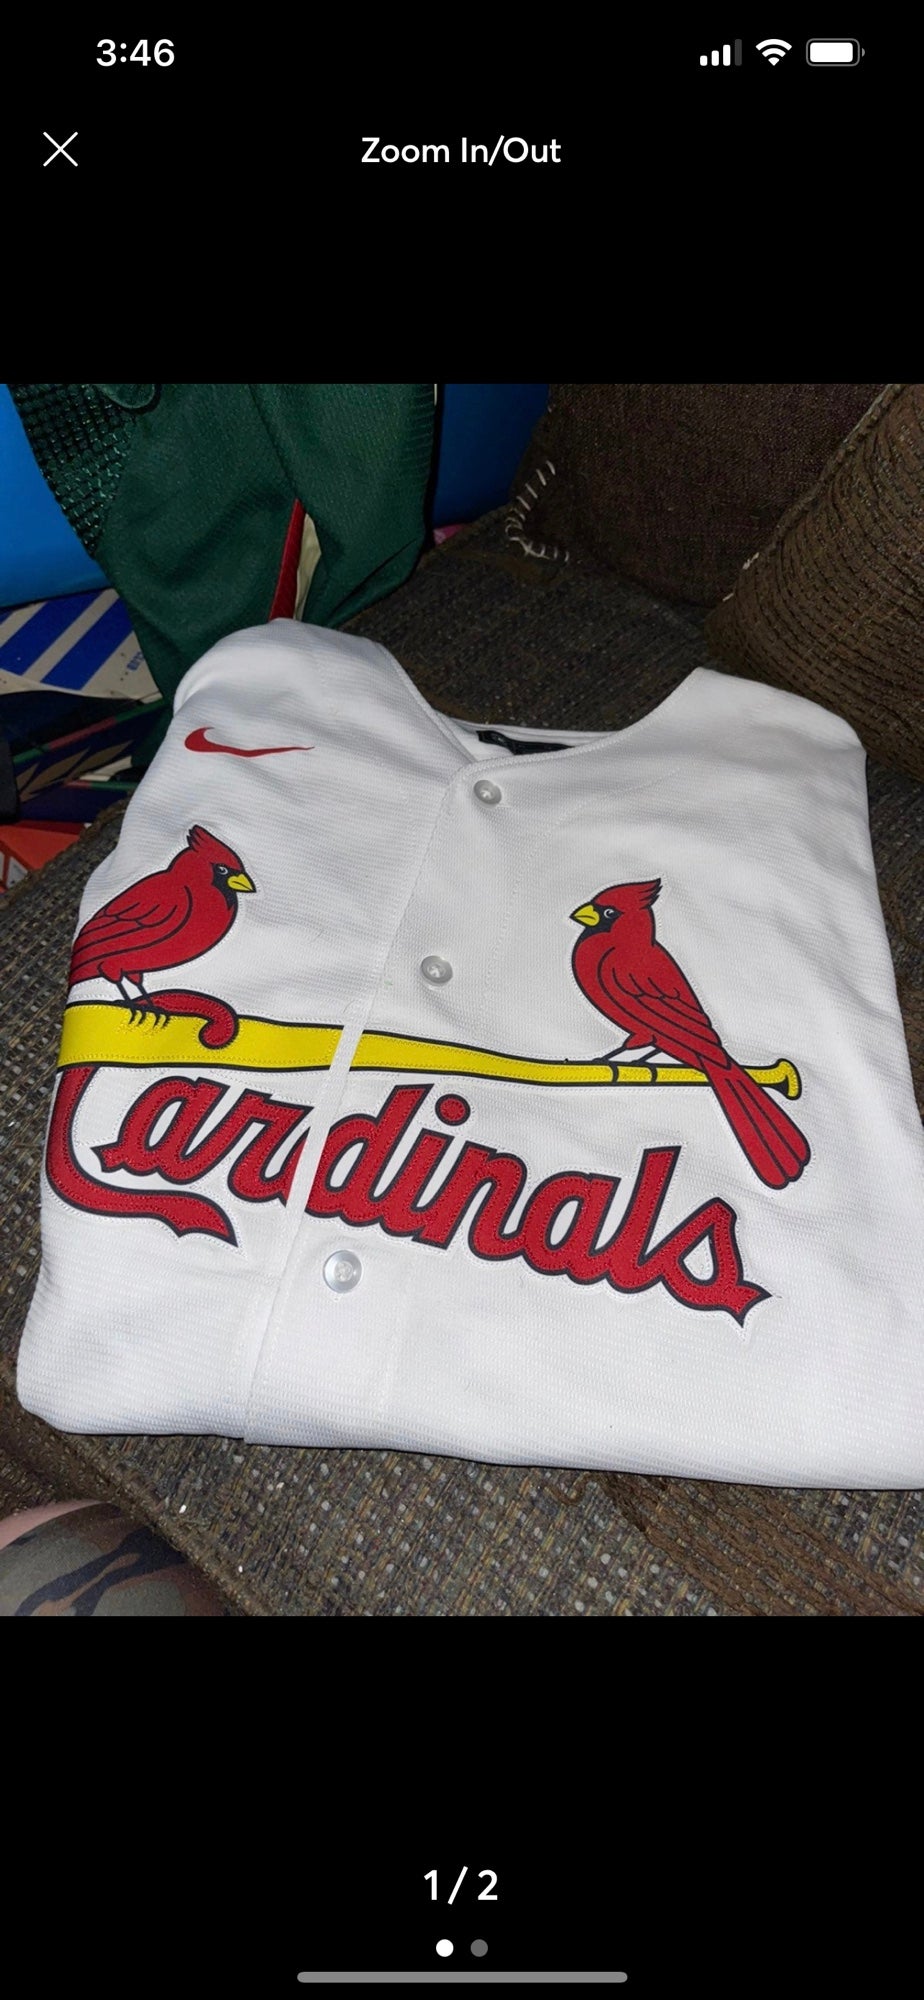 st louis cardinals jersey for sale